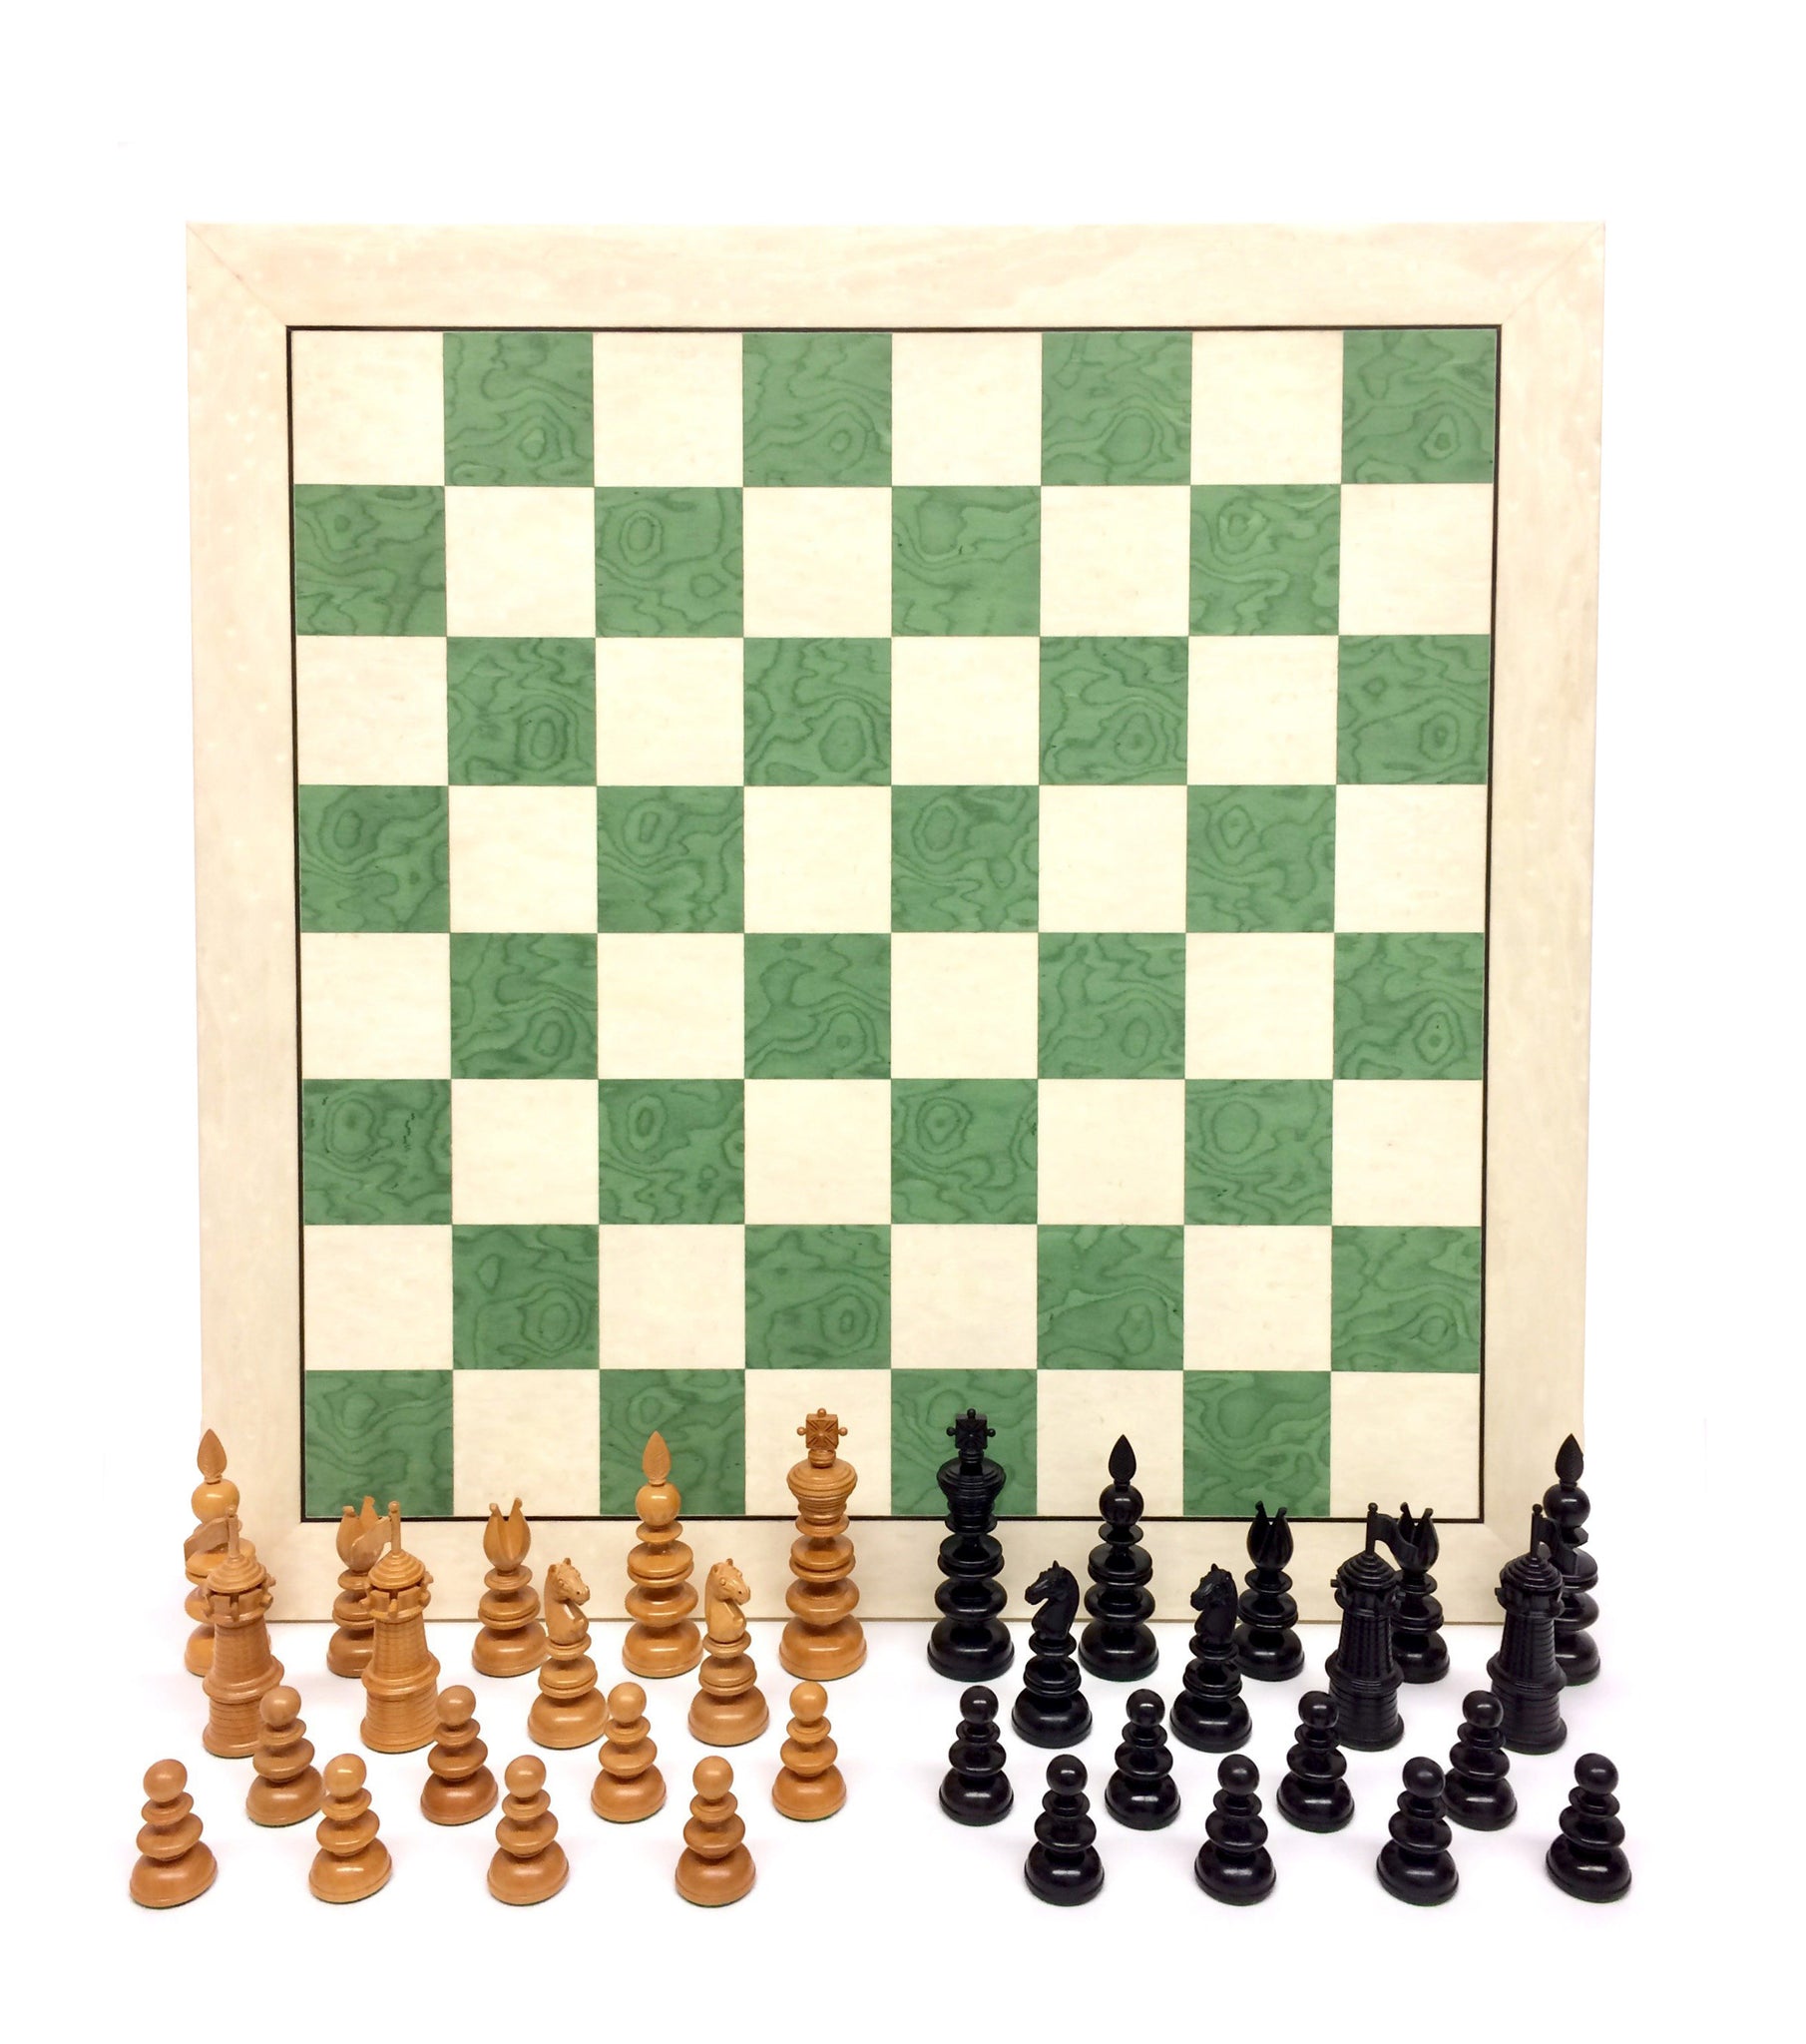 The 1820 Thomas Lund English Chess Pieces - The Camaratta